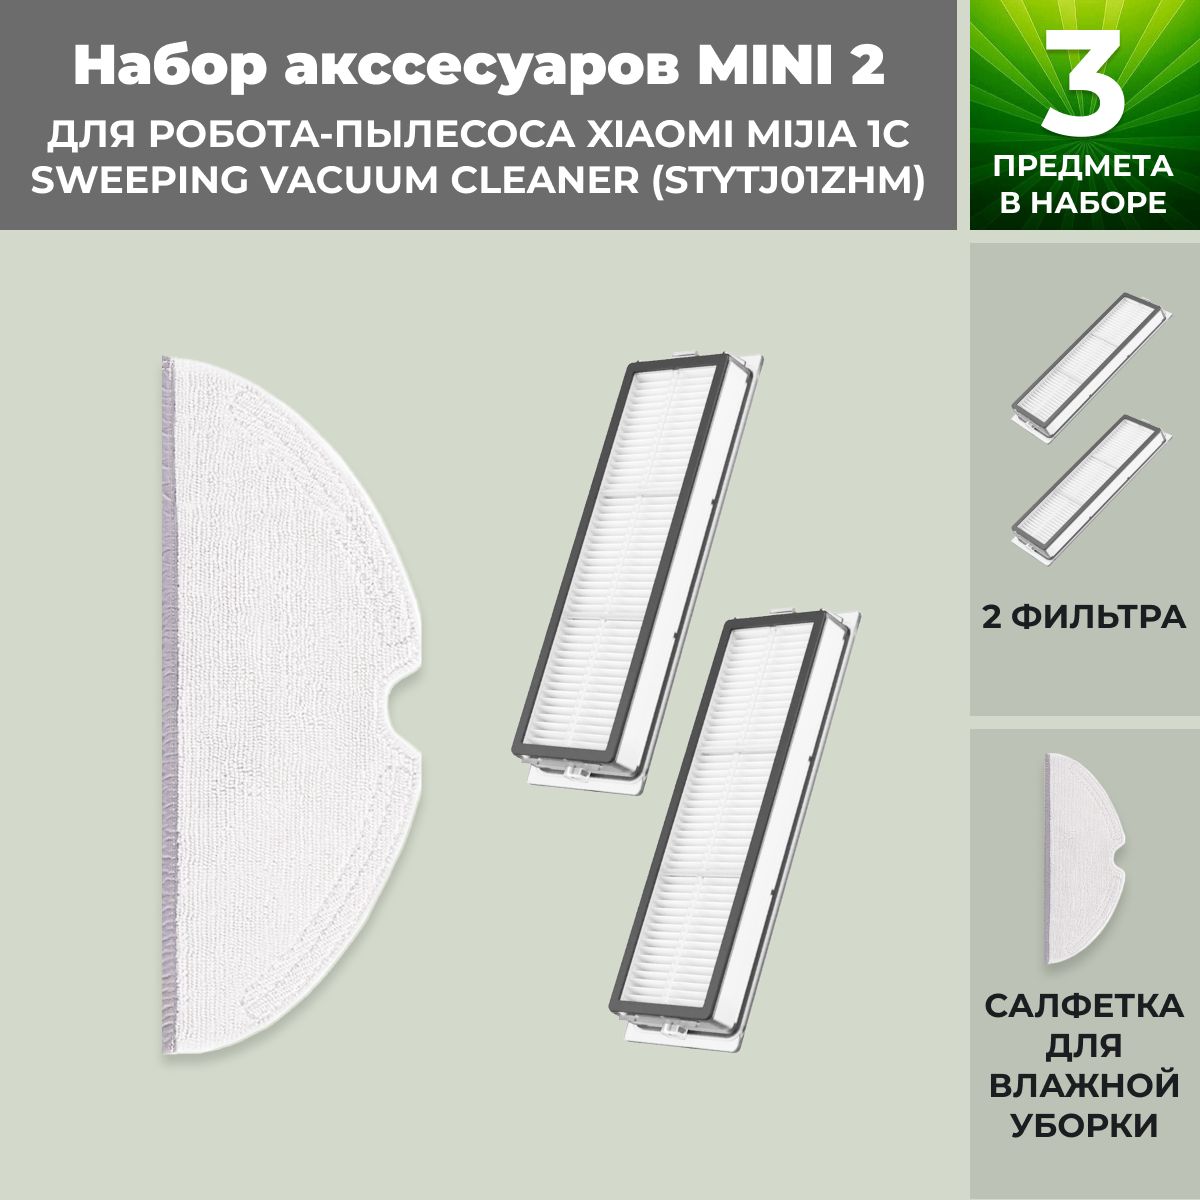 Робот-Пылесос Xiaomi Mijia Sweeping Vacuum Cleaner 1C Stytj01zhm